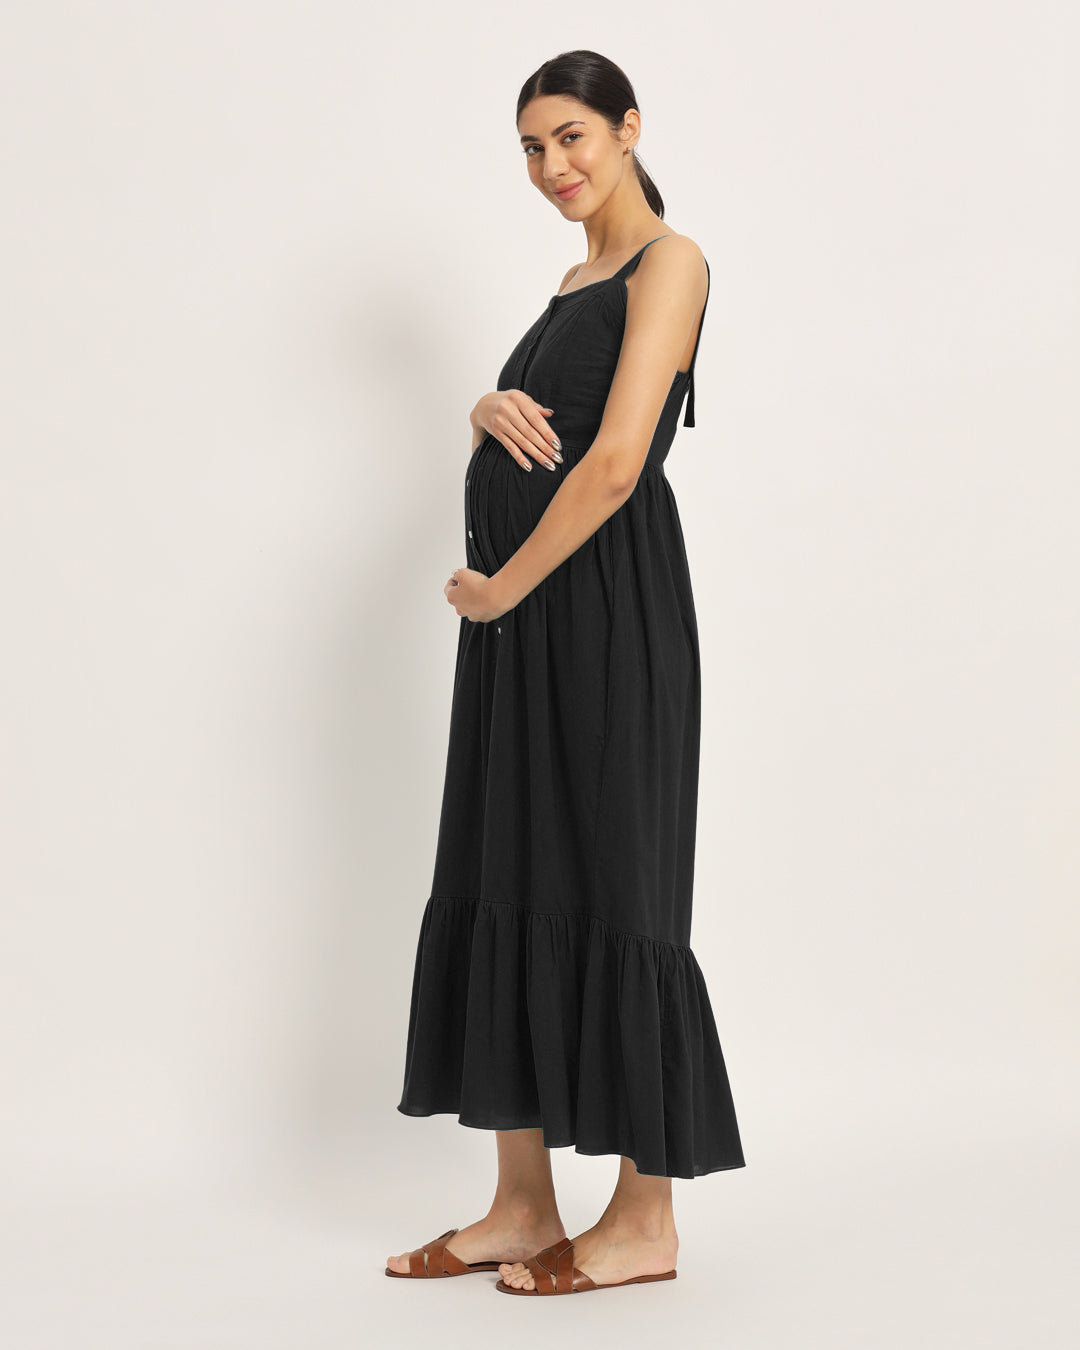 Combo: Black & Sage Green Mama Modish Maternity & Nursing Dress